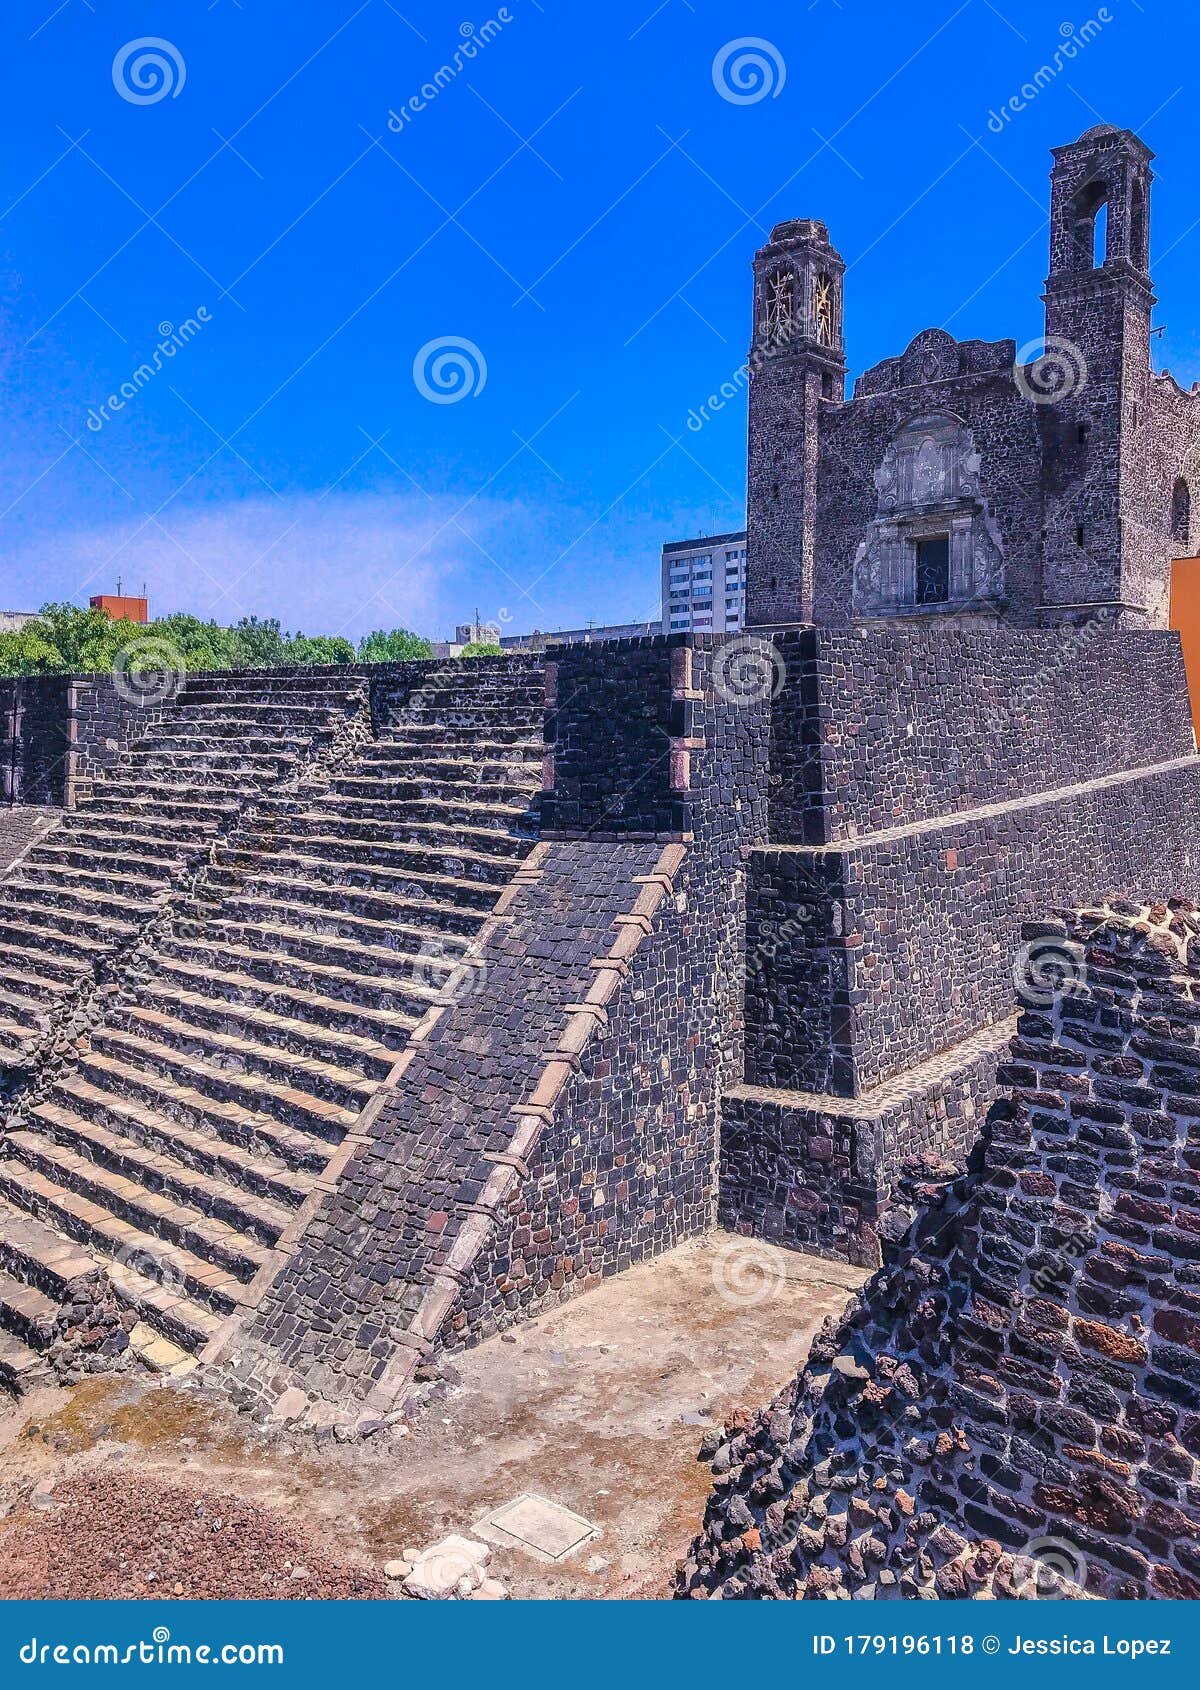 arqueological zone of tlatelolco in mexico